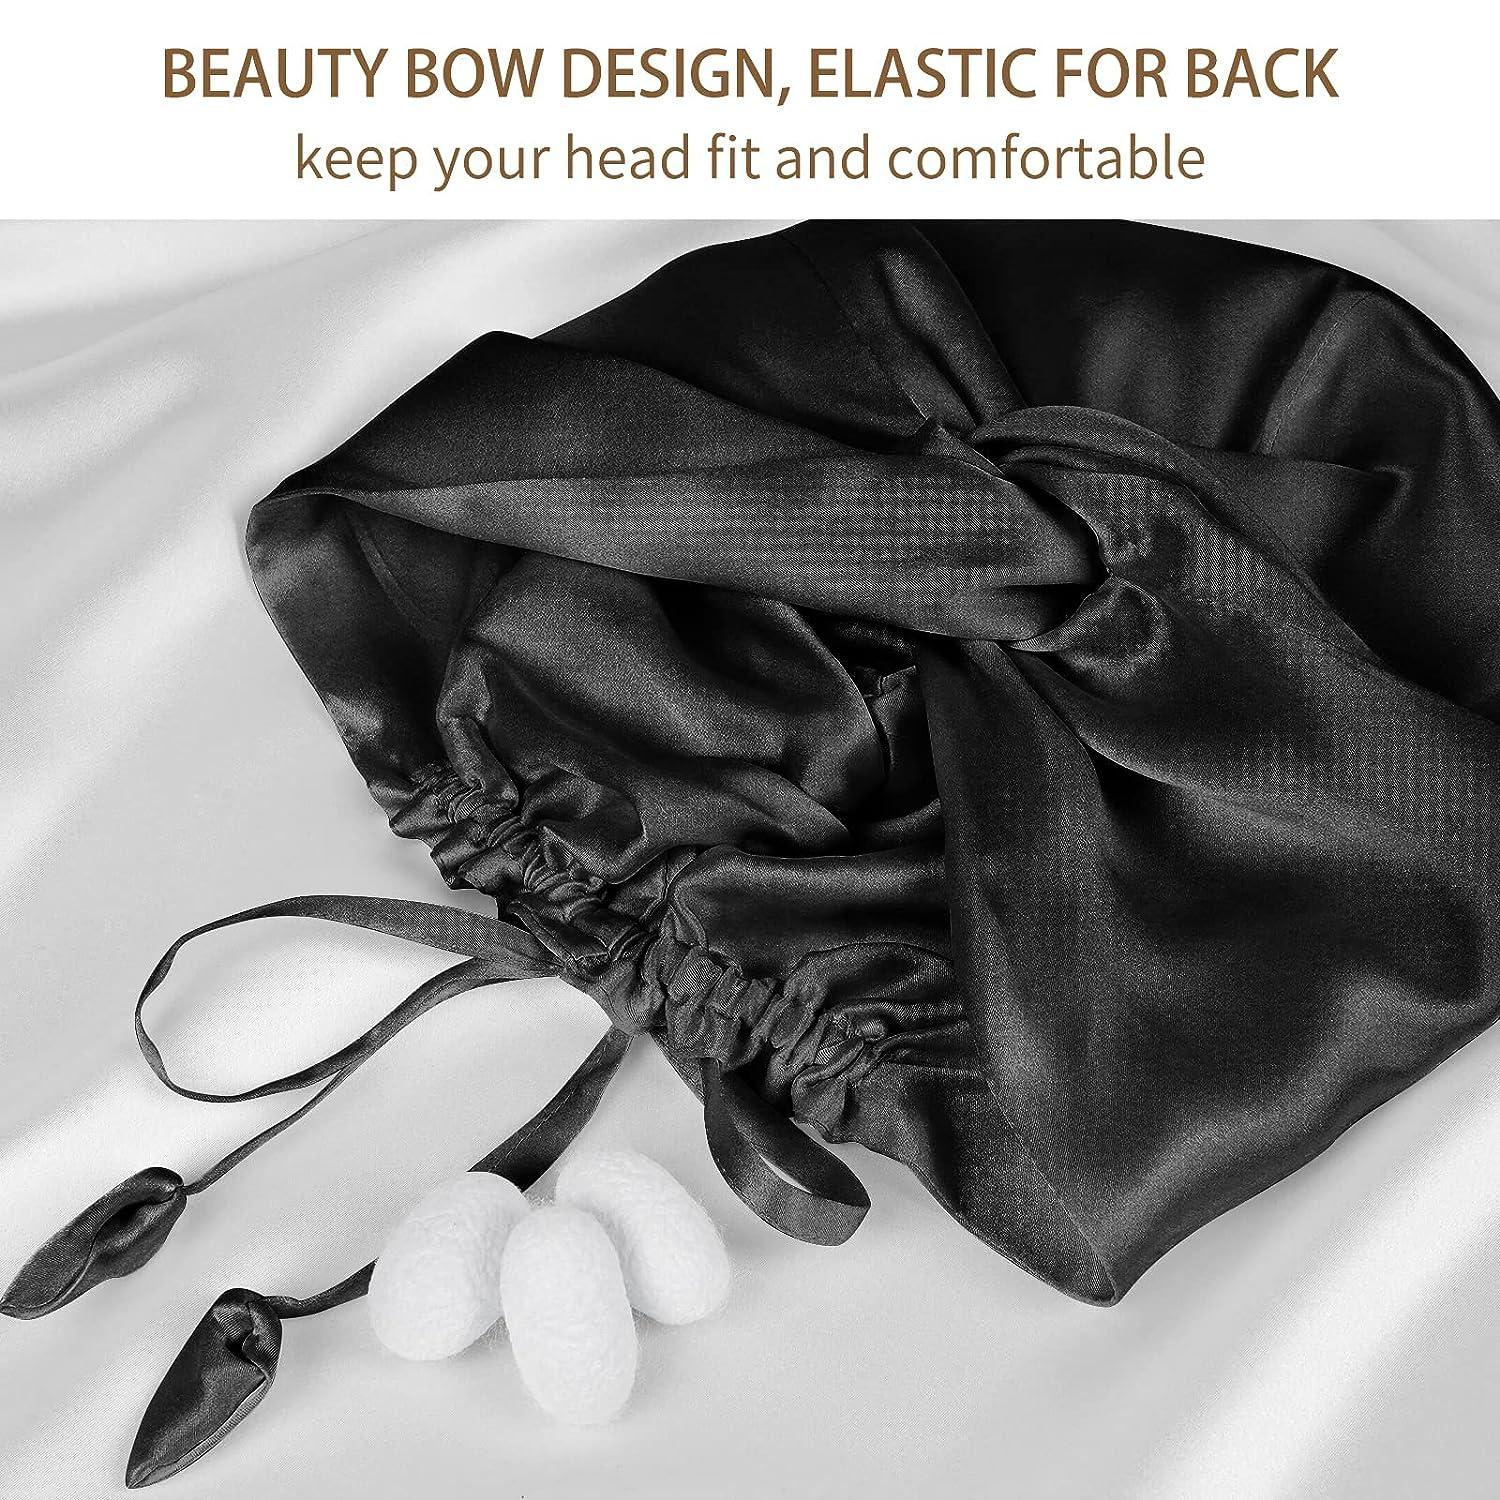 OLESILK Silk Lined Sleep Cap for Women, Silk-Bonnet Hair Cover for